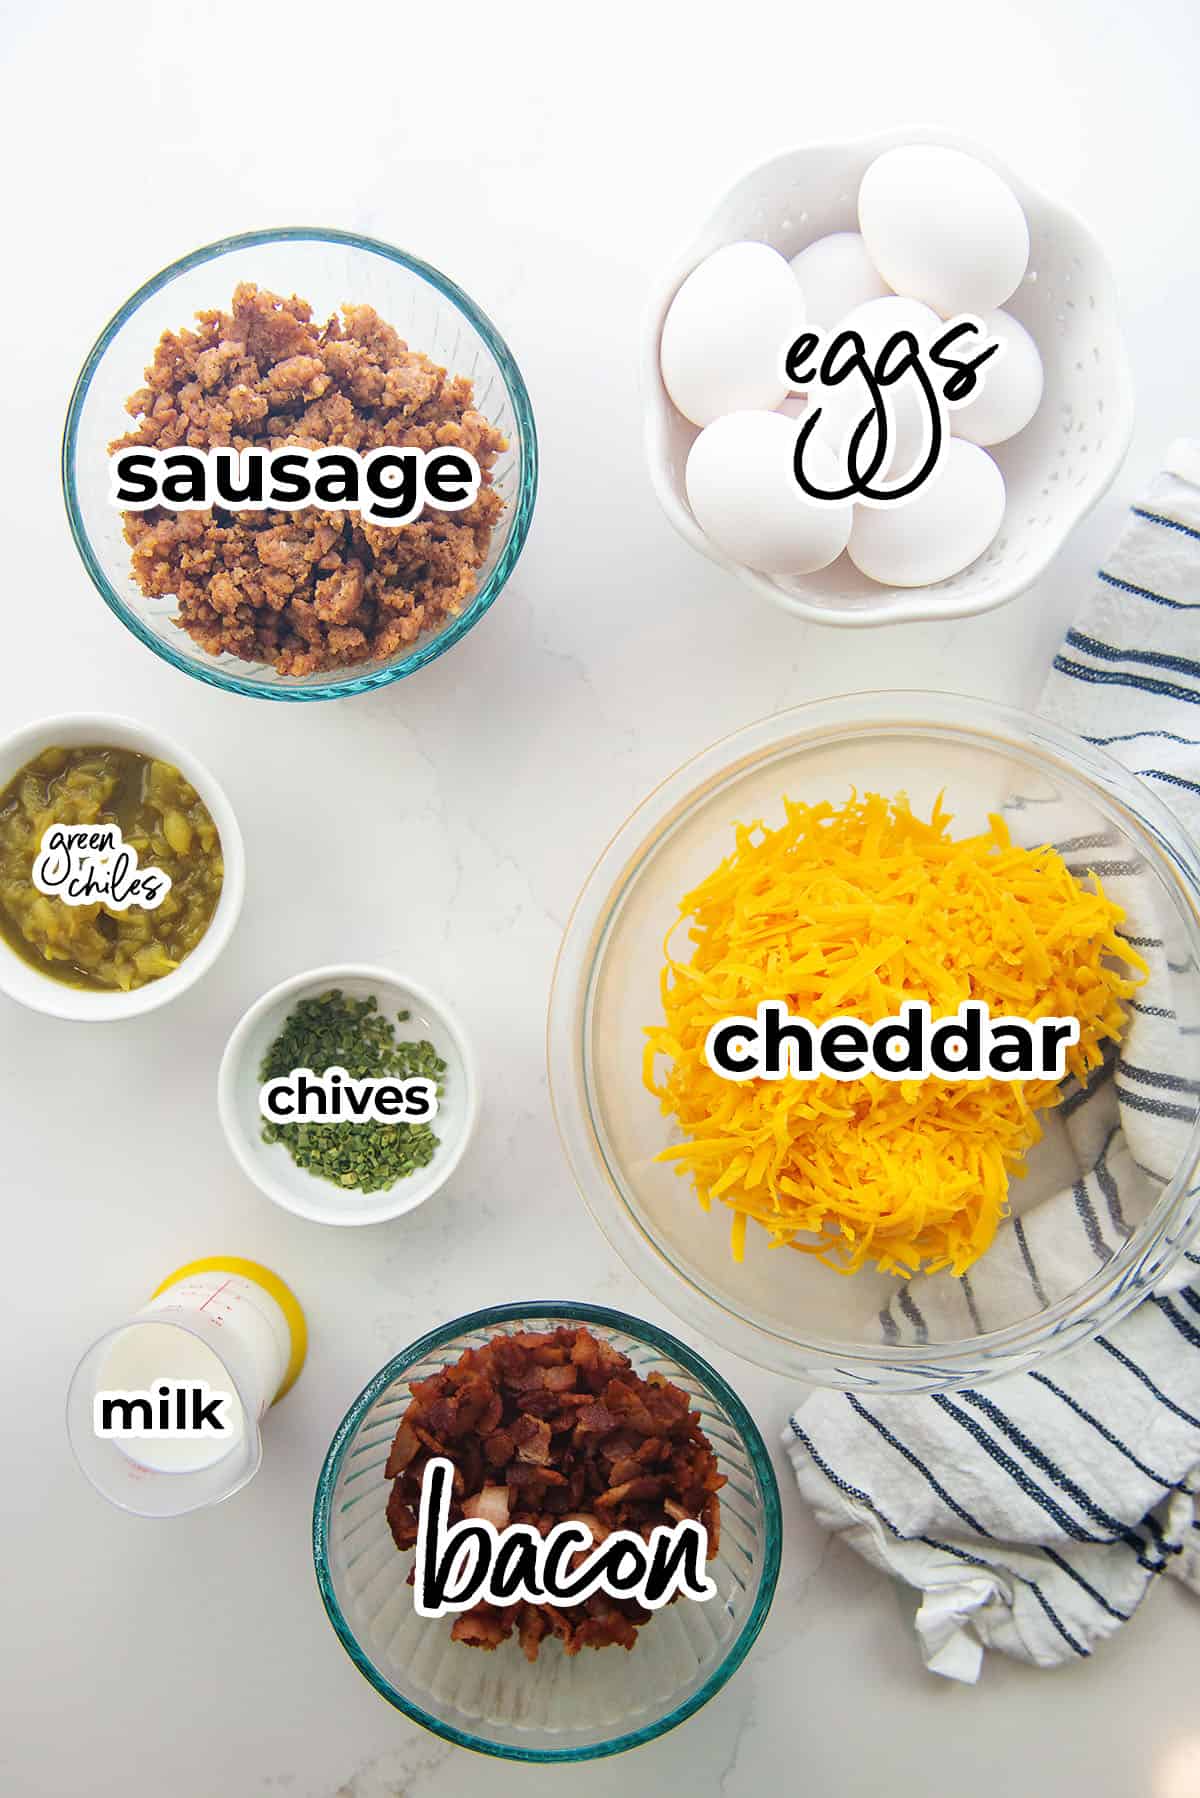 ingredients for tater tot breakfast casserole.